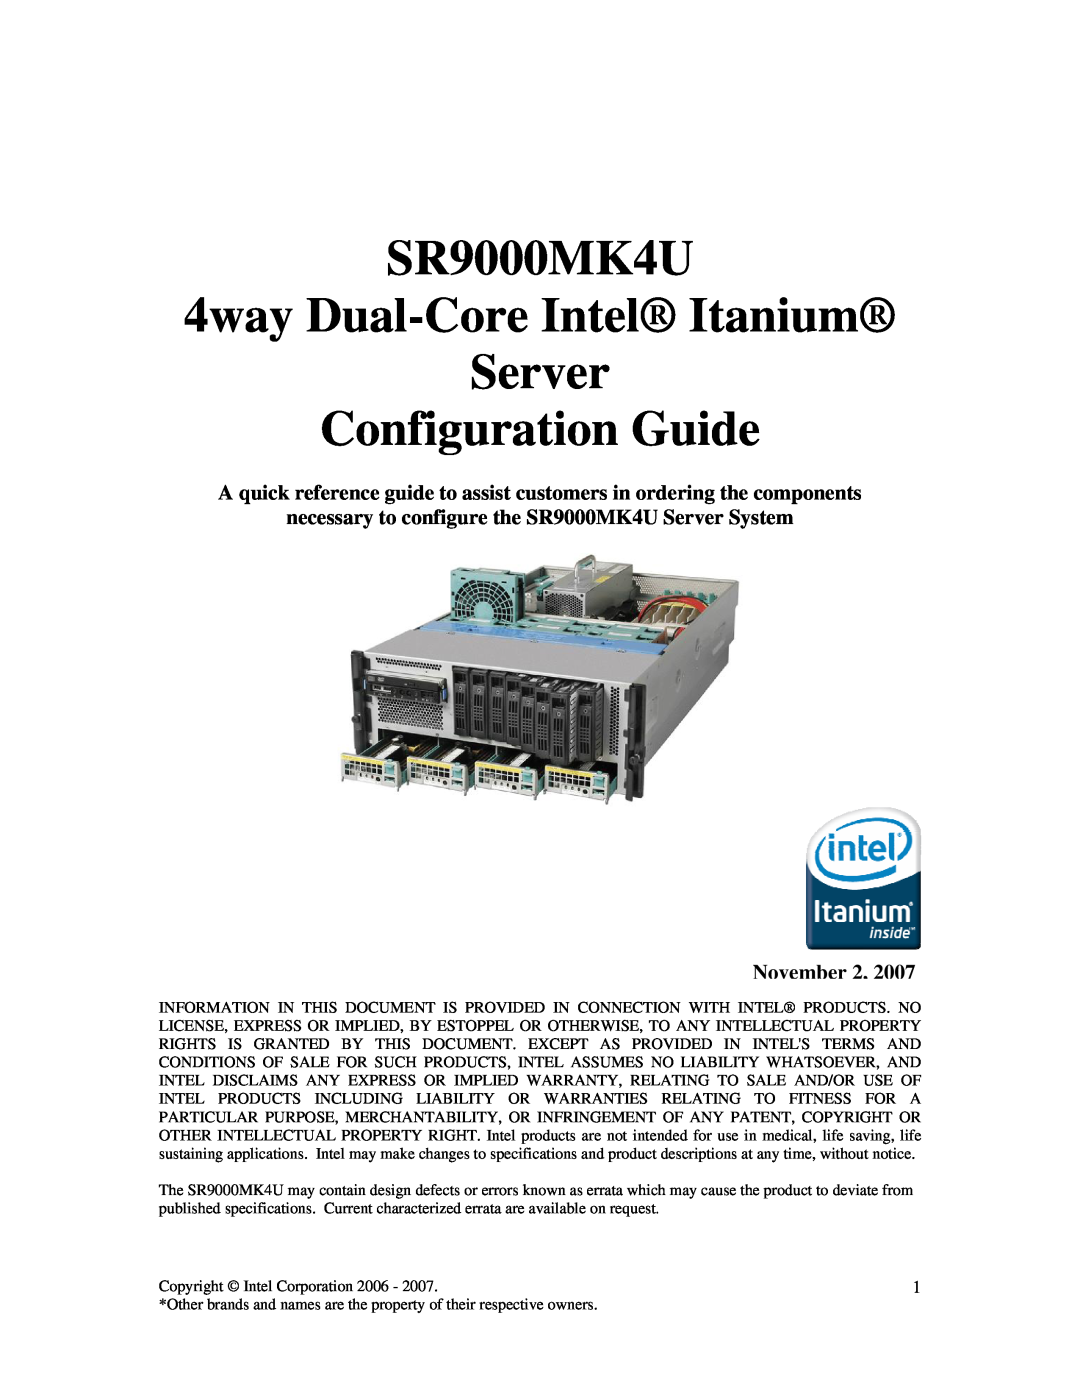 Intel warranty SR9000MK4U 4way Dual-CoreIntel Itanium Server, Configuration Guide 